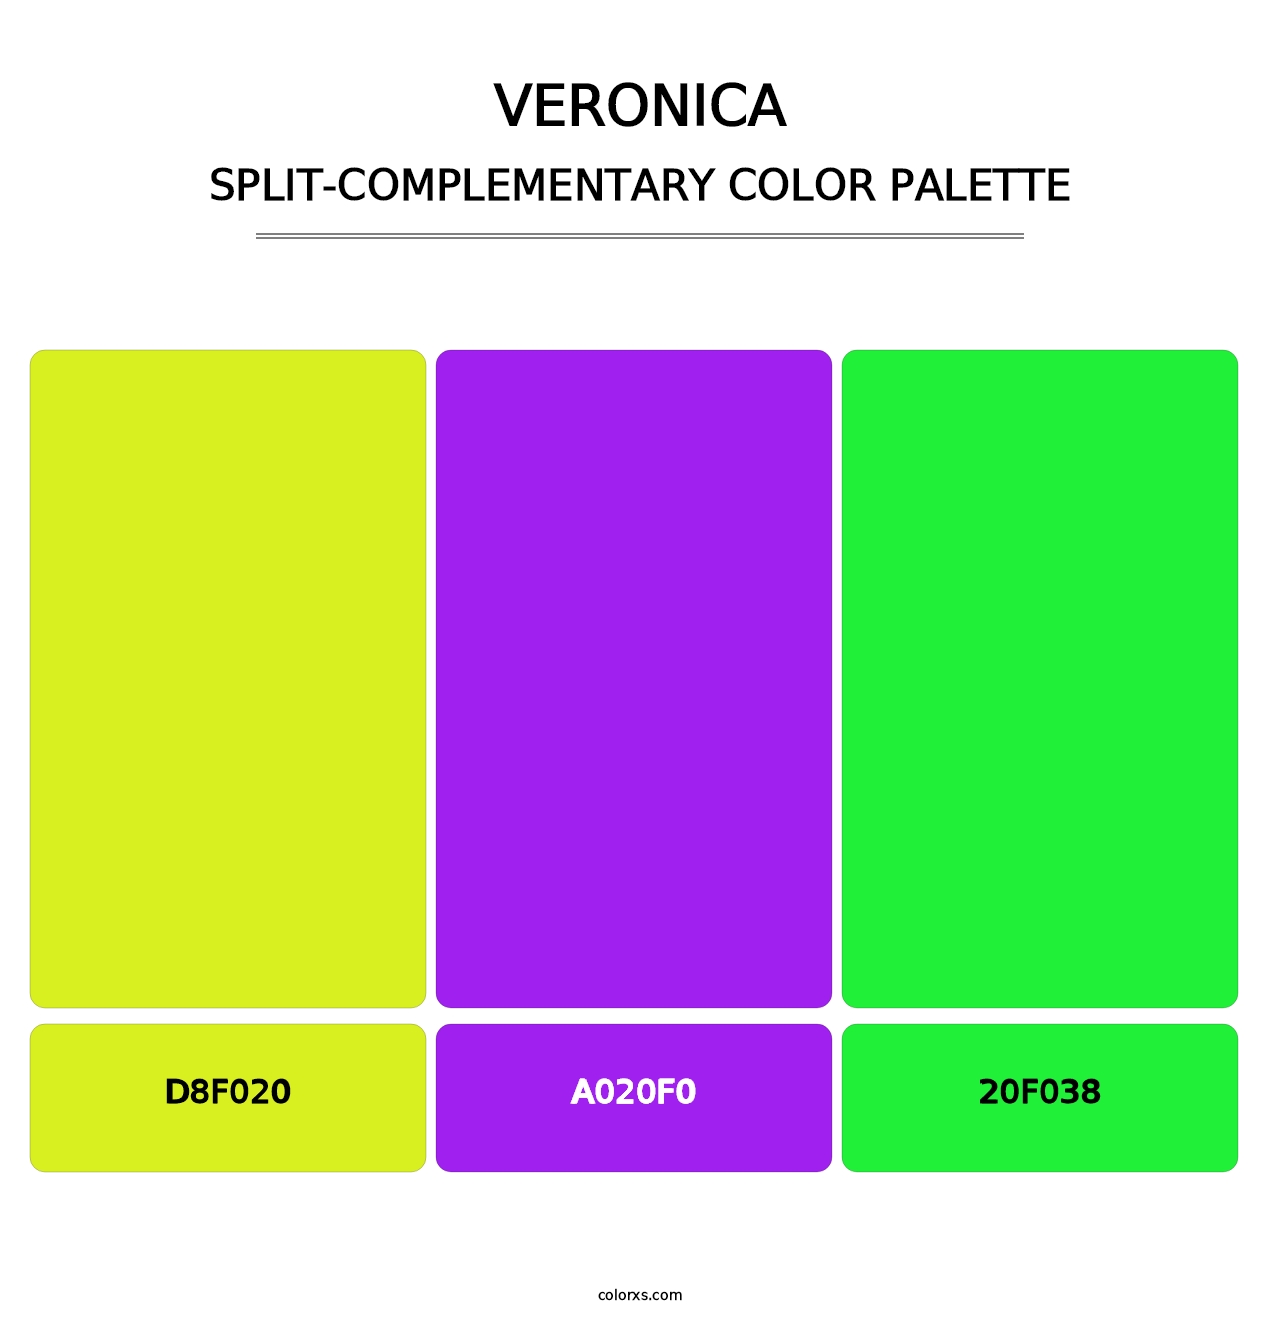 Veronica - Split-Complementary Color Palette